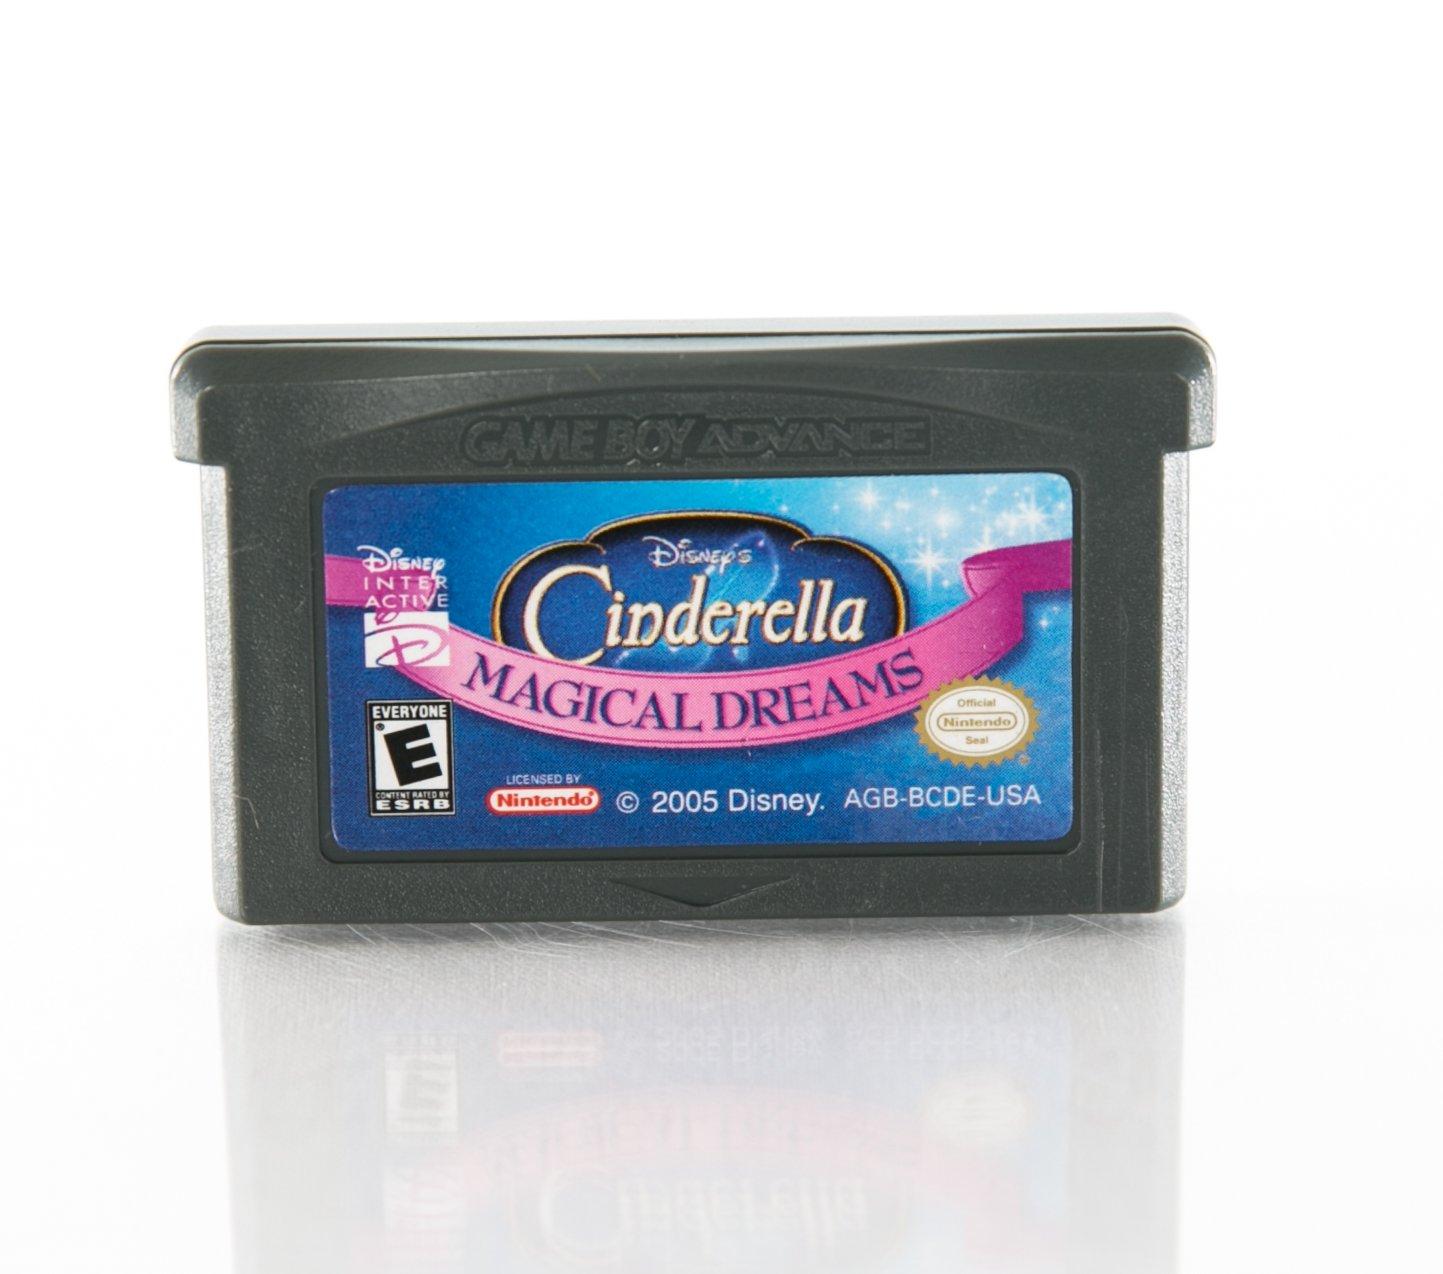 Disney's Cinderella: Magical Dreams - Game Boy Advance